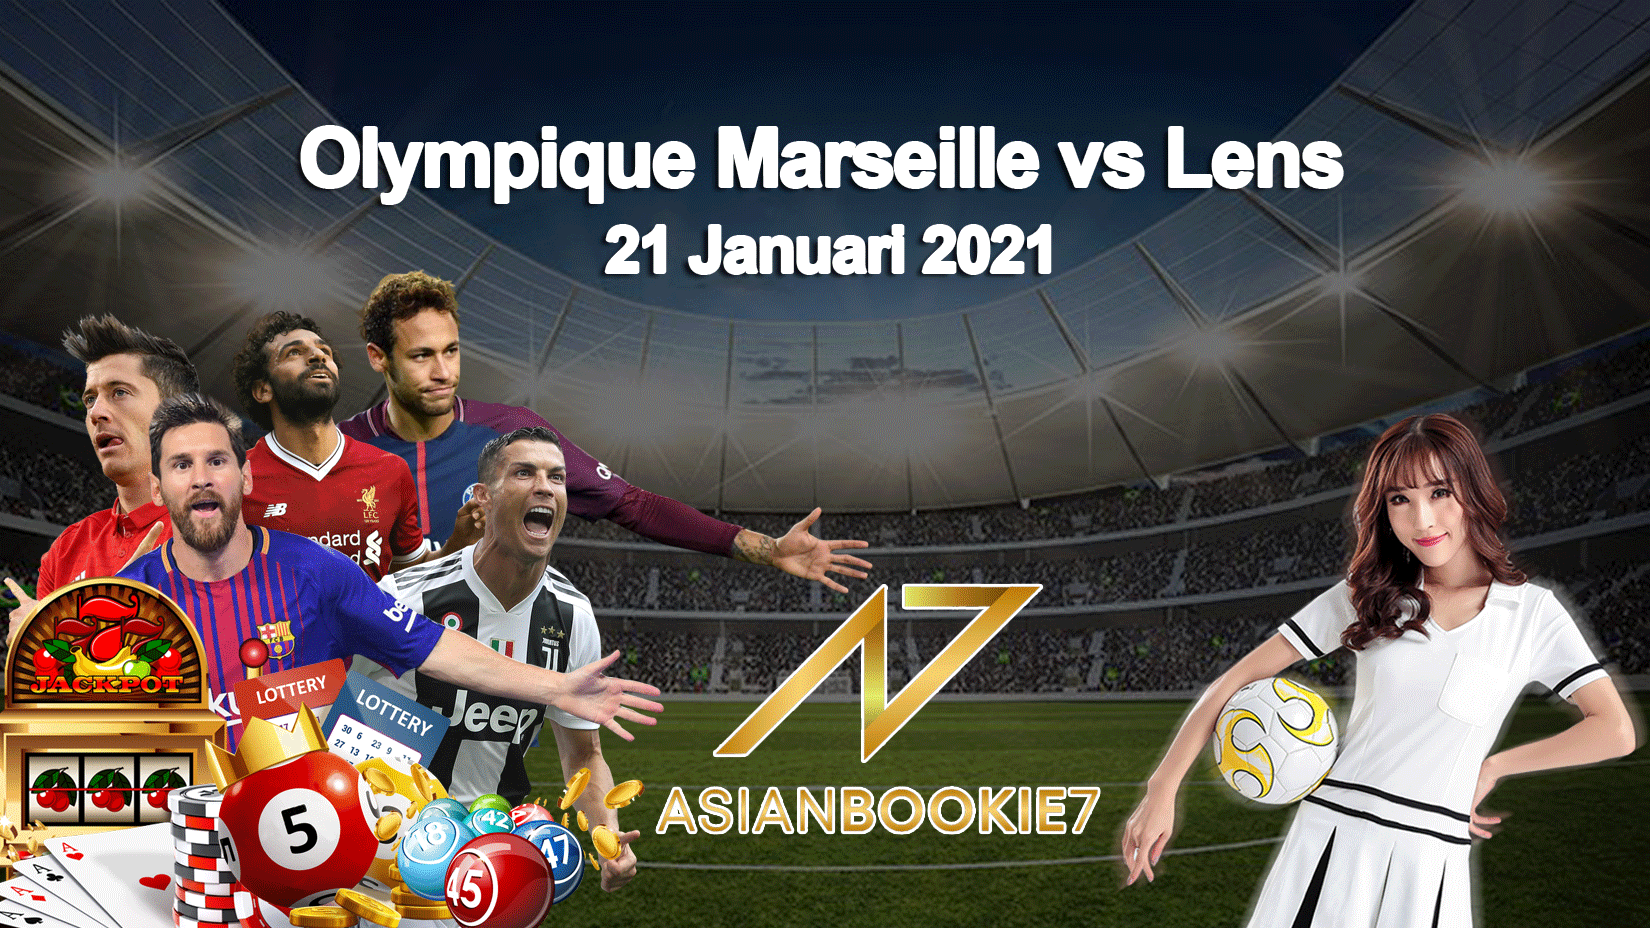 Prediksi-Olympique-Marseille-vs-Lens-21-Januari-2021